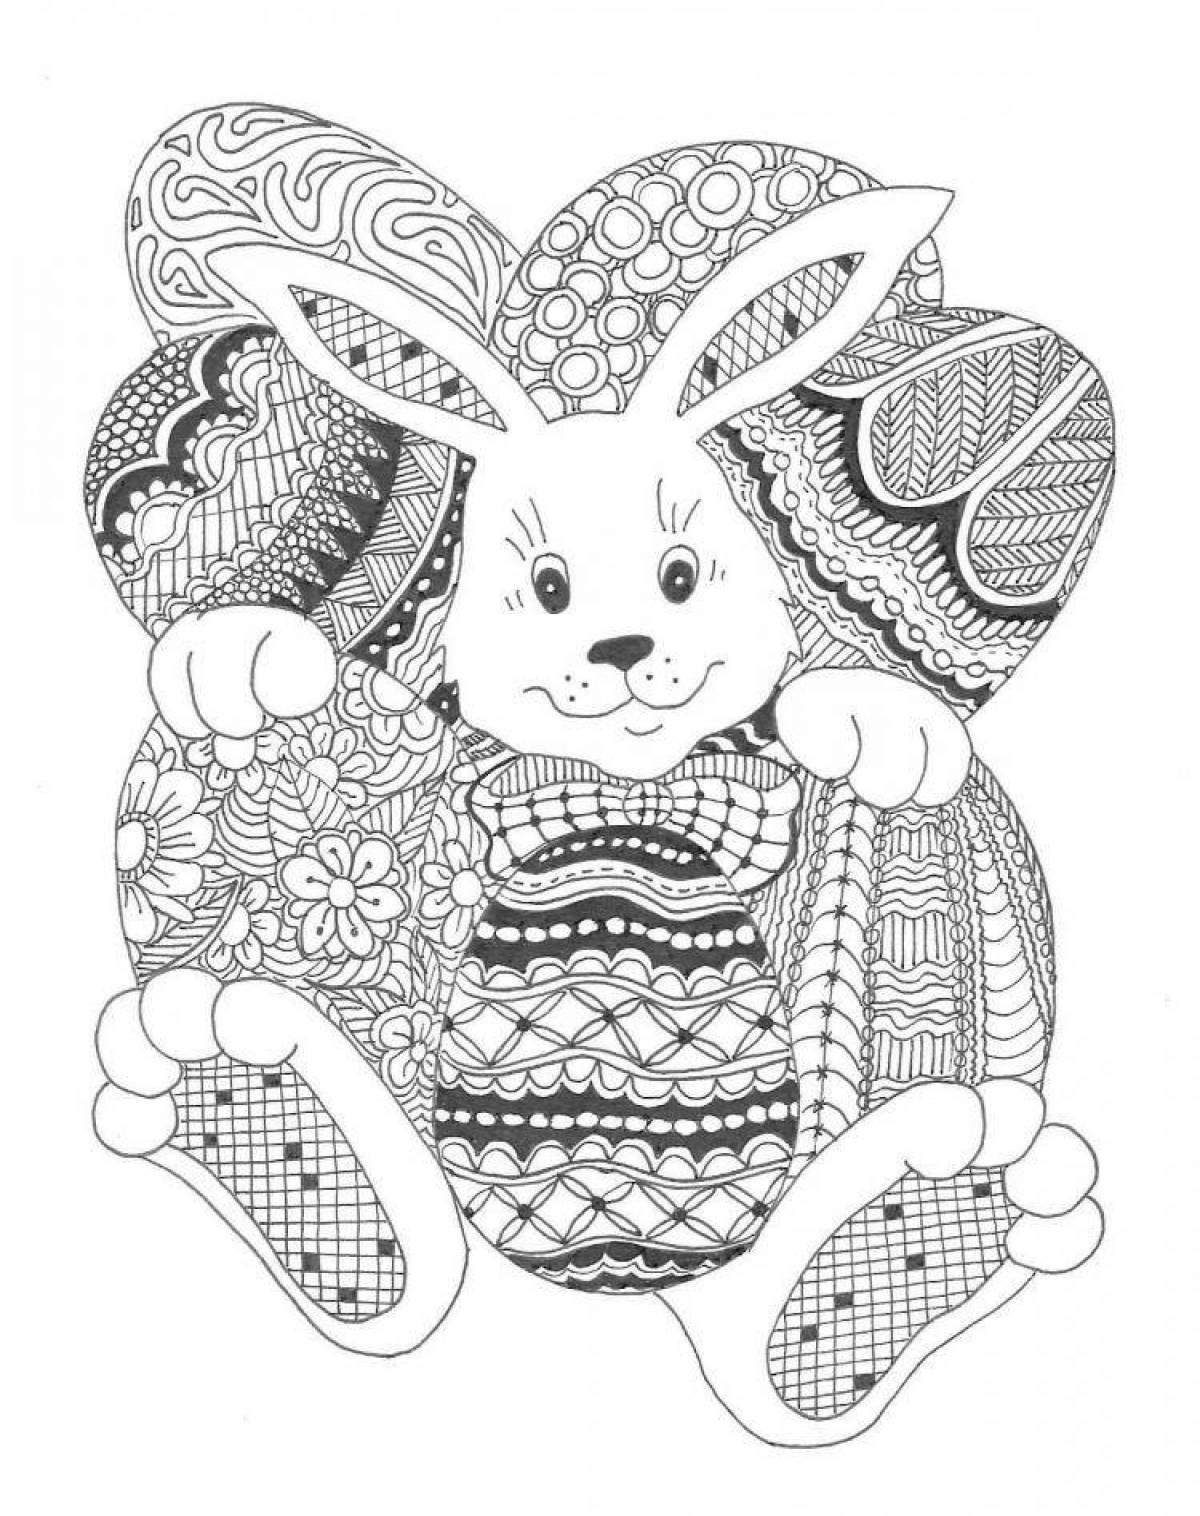 Coloring book shining anti-stress rabbit